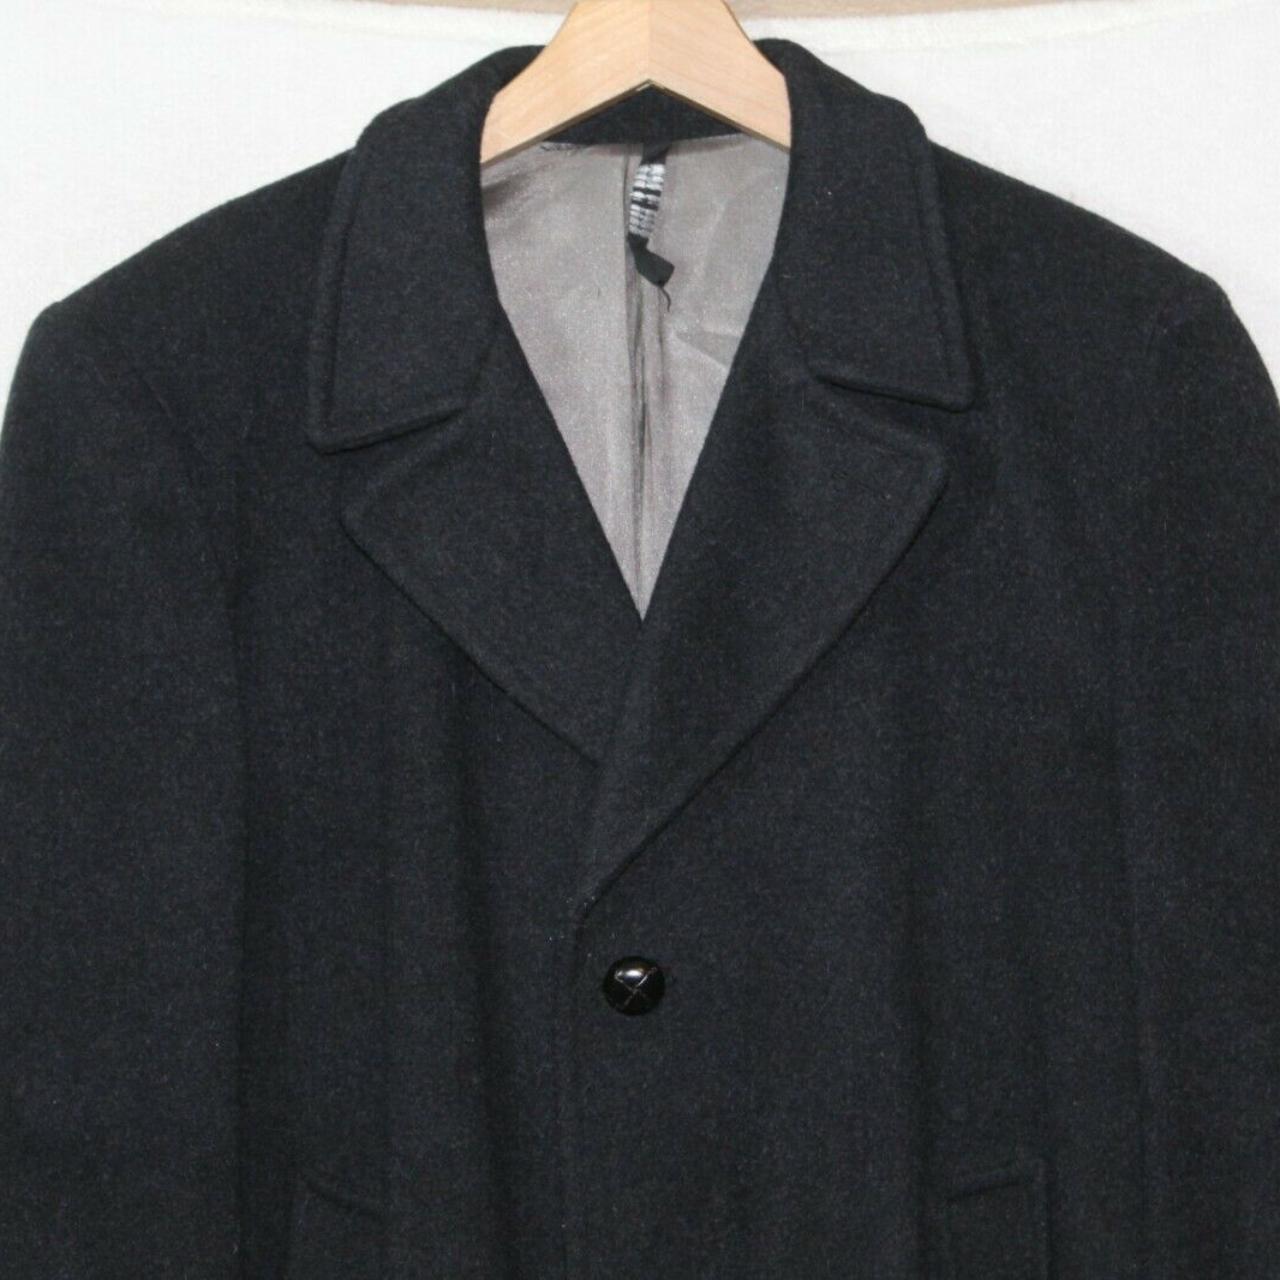 Product Image 3 - Vintage Stafford mens jacket size